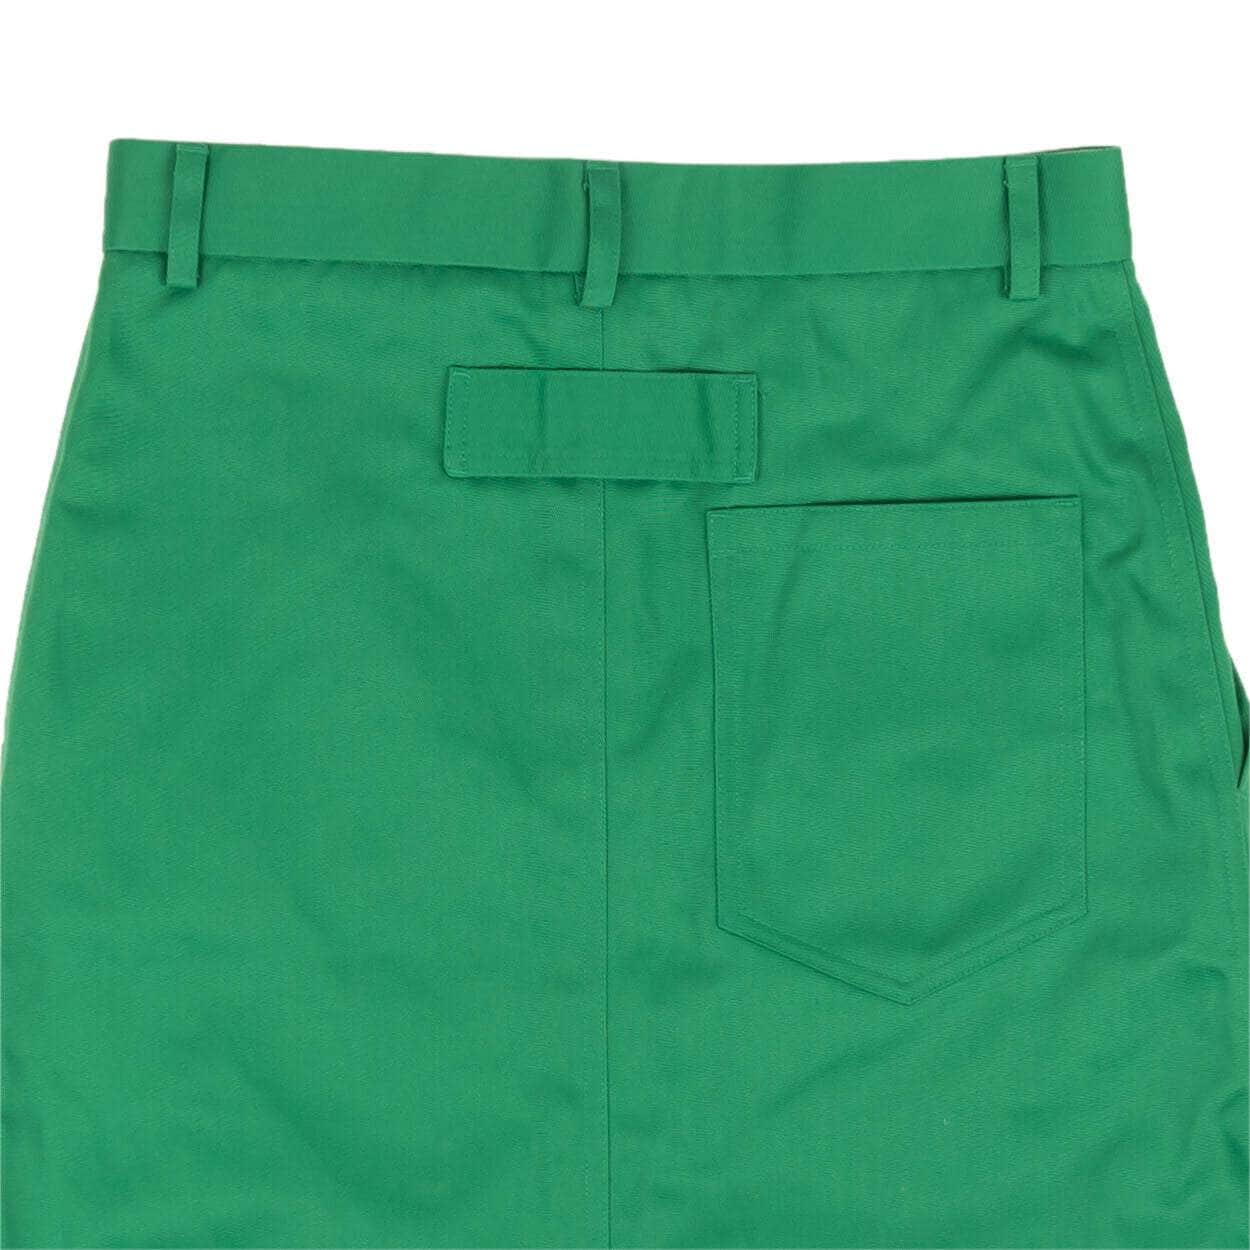 Xander Zhou channelenable-all, chicmi, couponcollection, gender-womens, main-clothing, MixedApparel, size-46, size-48, size-50, under-250, womens-pencil-skirts, xander-zhou 48 Green Straight Pencil Skirt 95-XZO-0005/48 95-XZO-0005/48